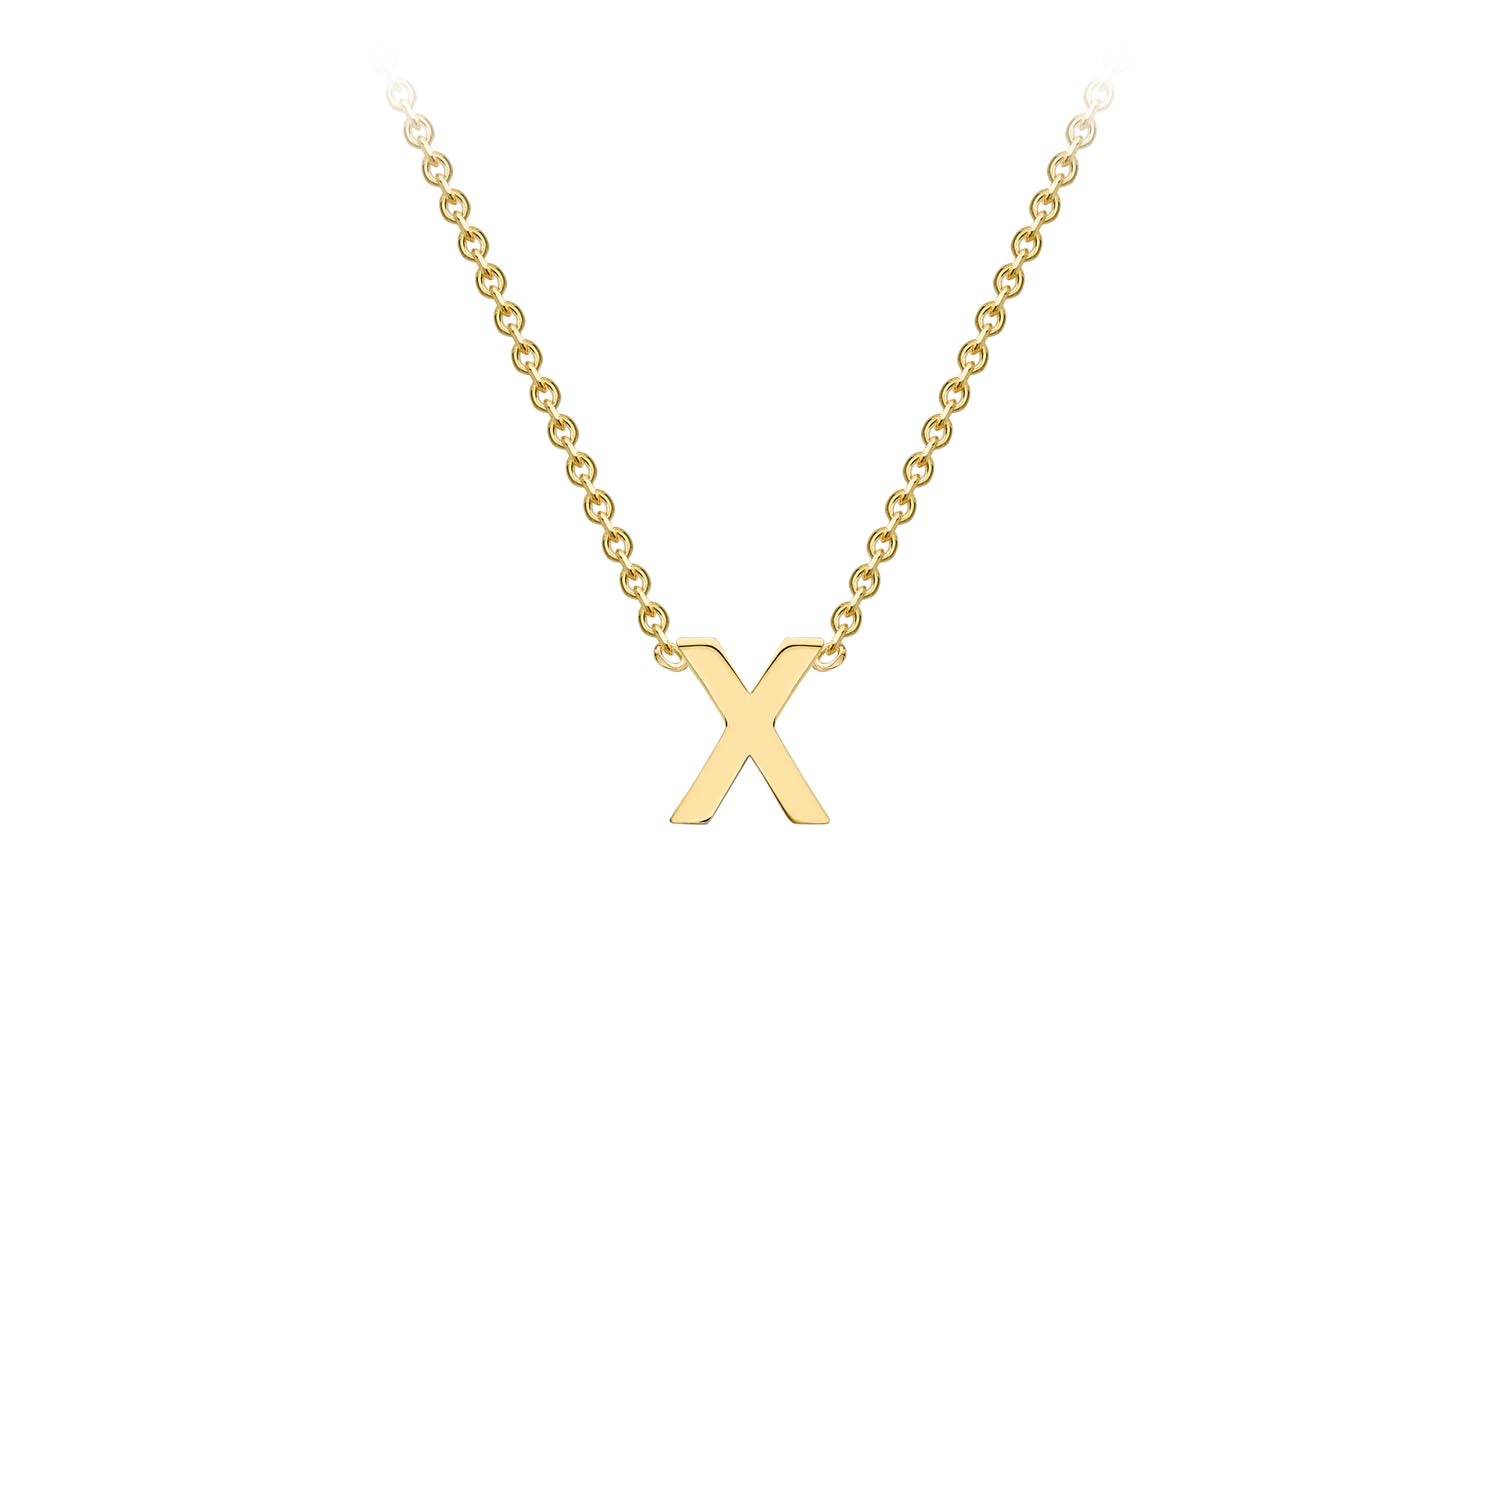 9ct Y/G Initial Letter "X" Necklace 38+5cm